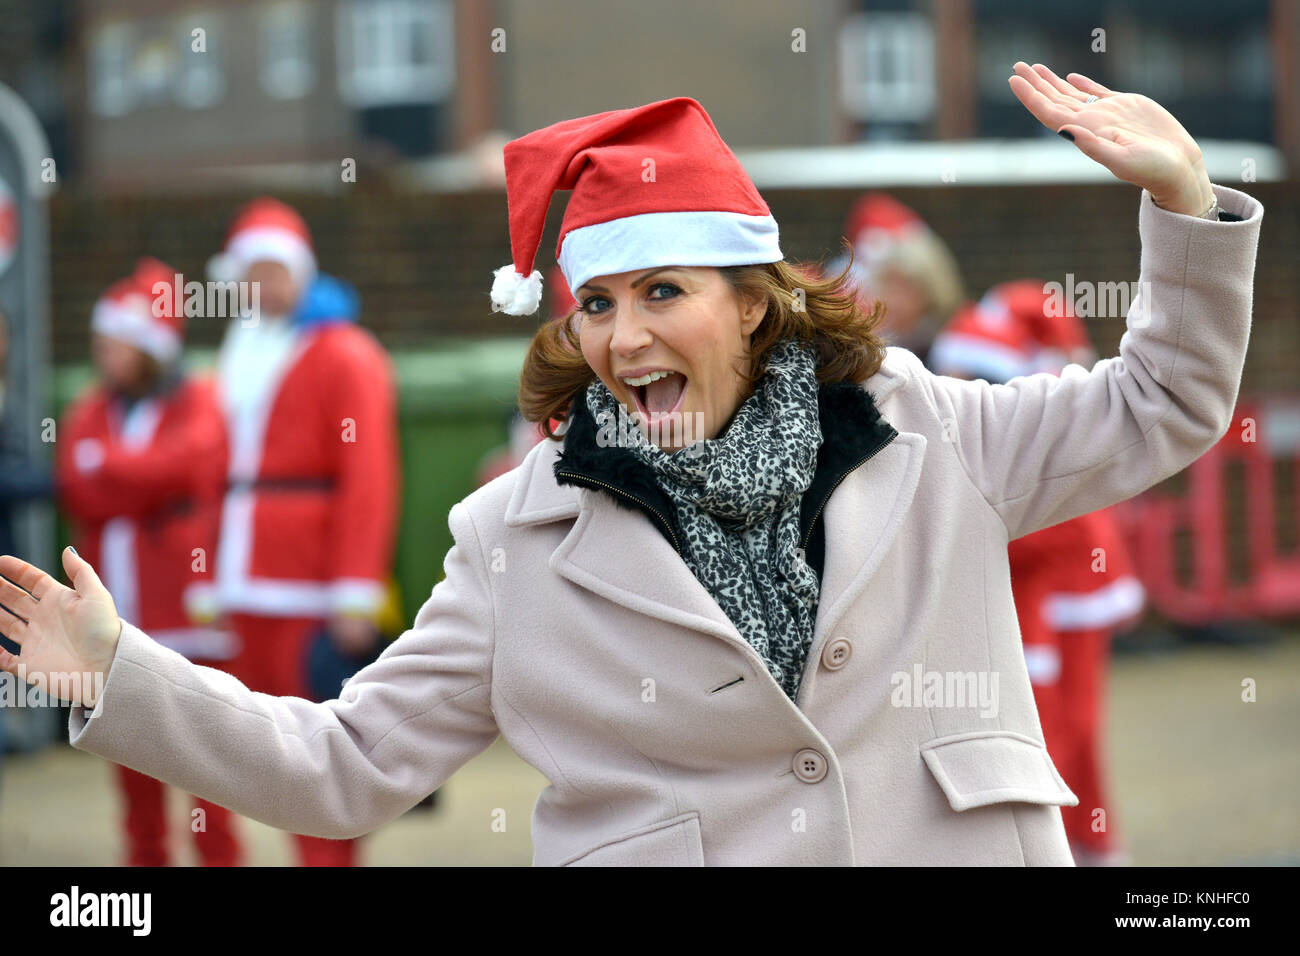 Natasha Kaplinsky in a santa hat at The Bevern Trust Santa Run in Lewes, East Sussex. 2017 Stock Photo